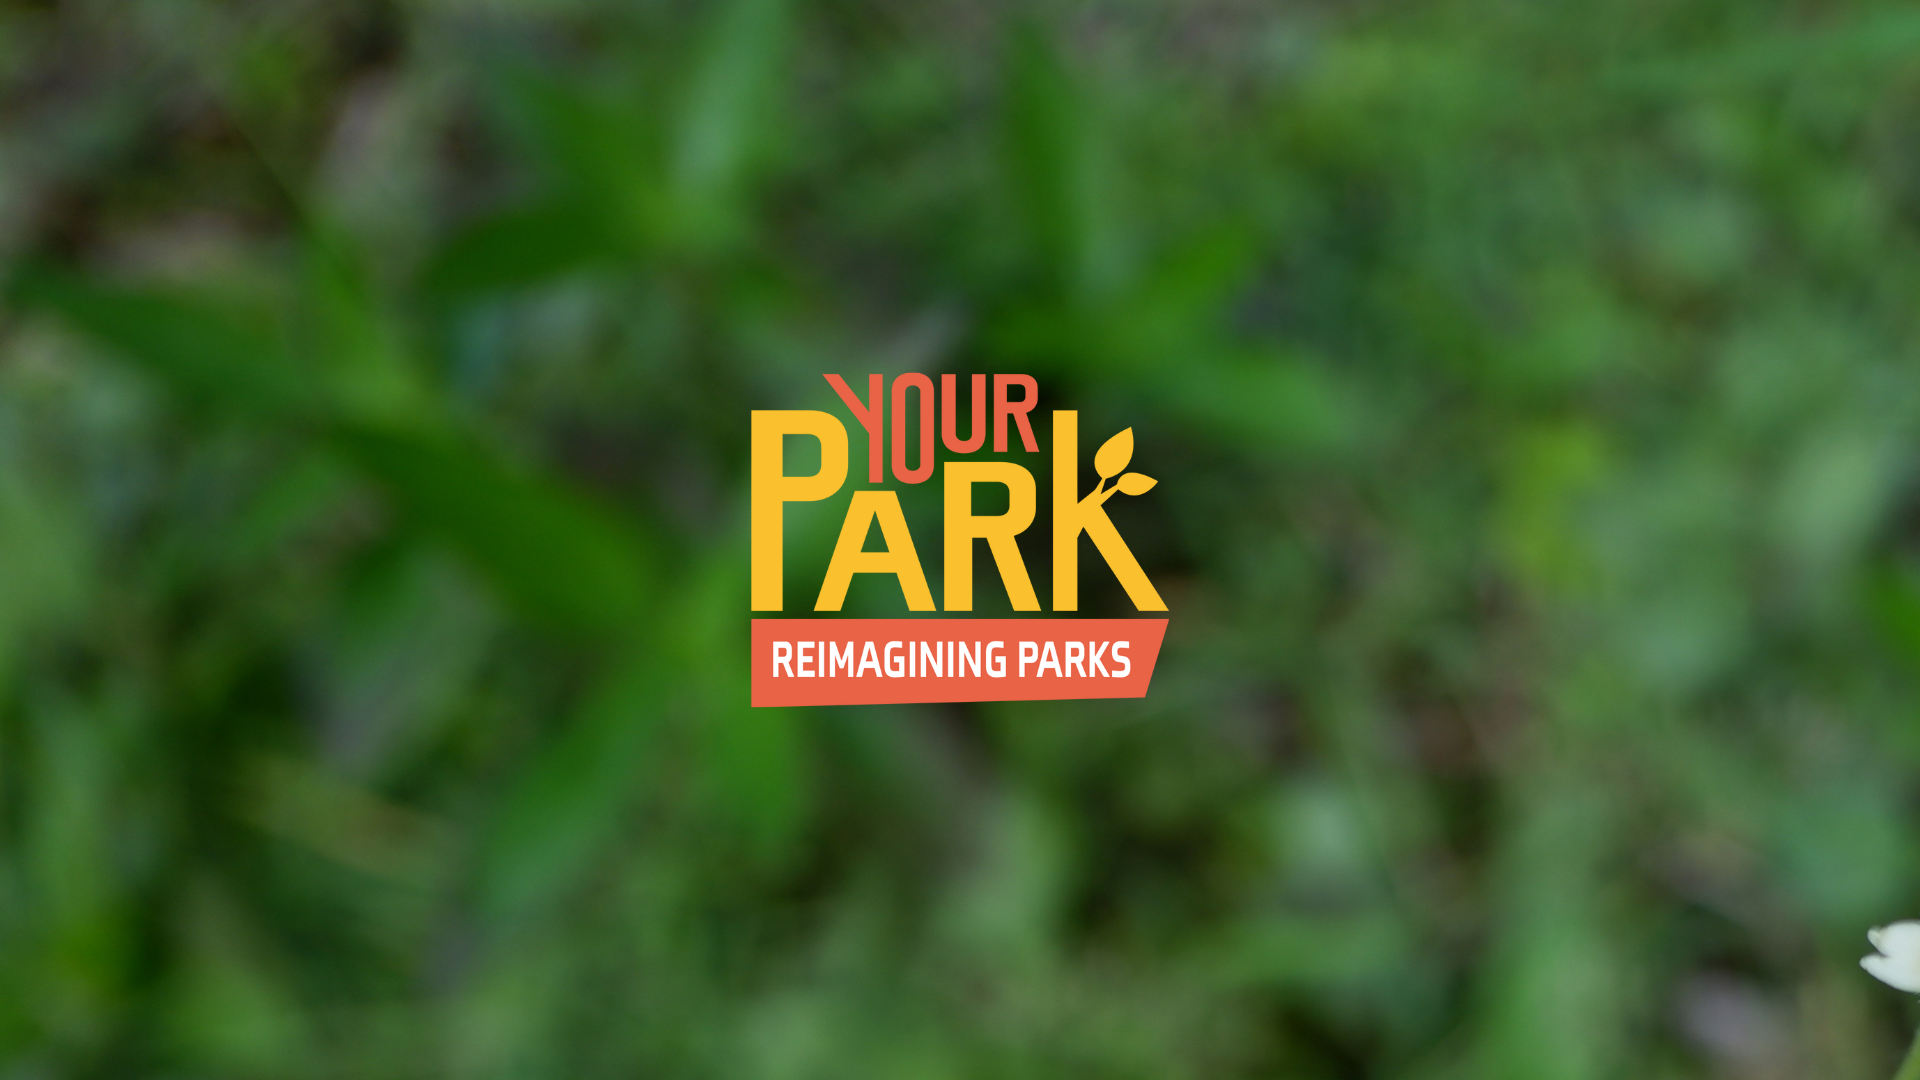 Reimaginging parks